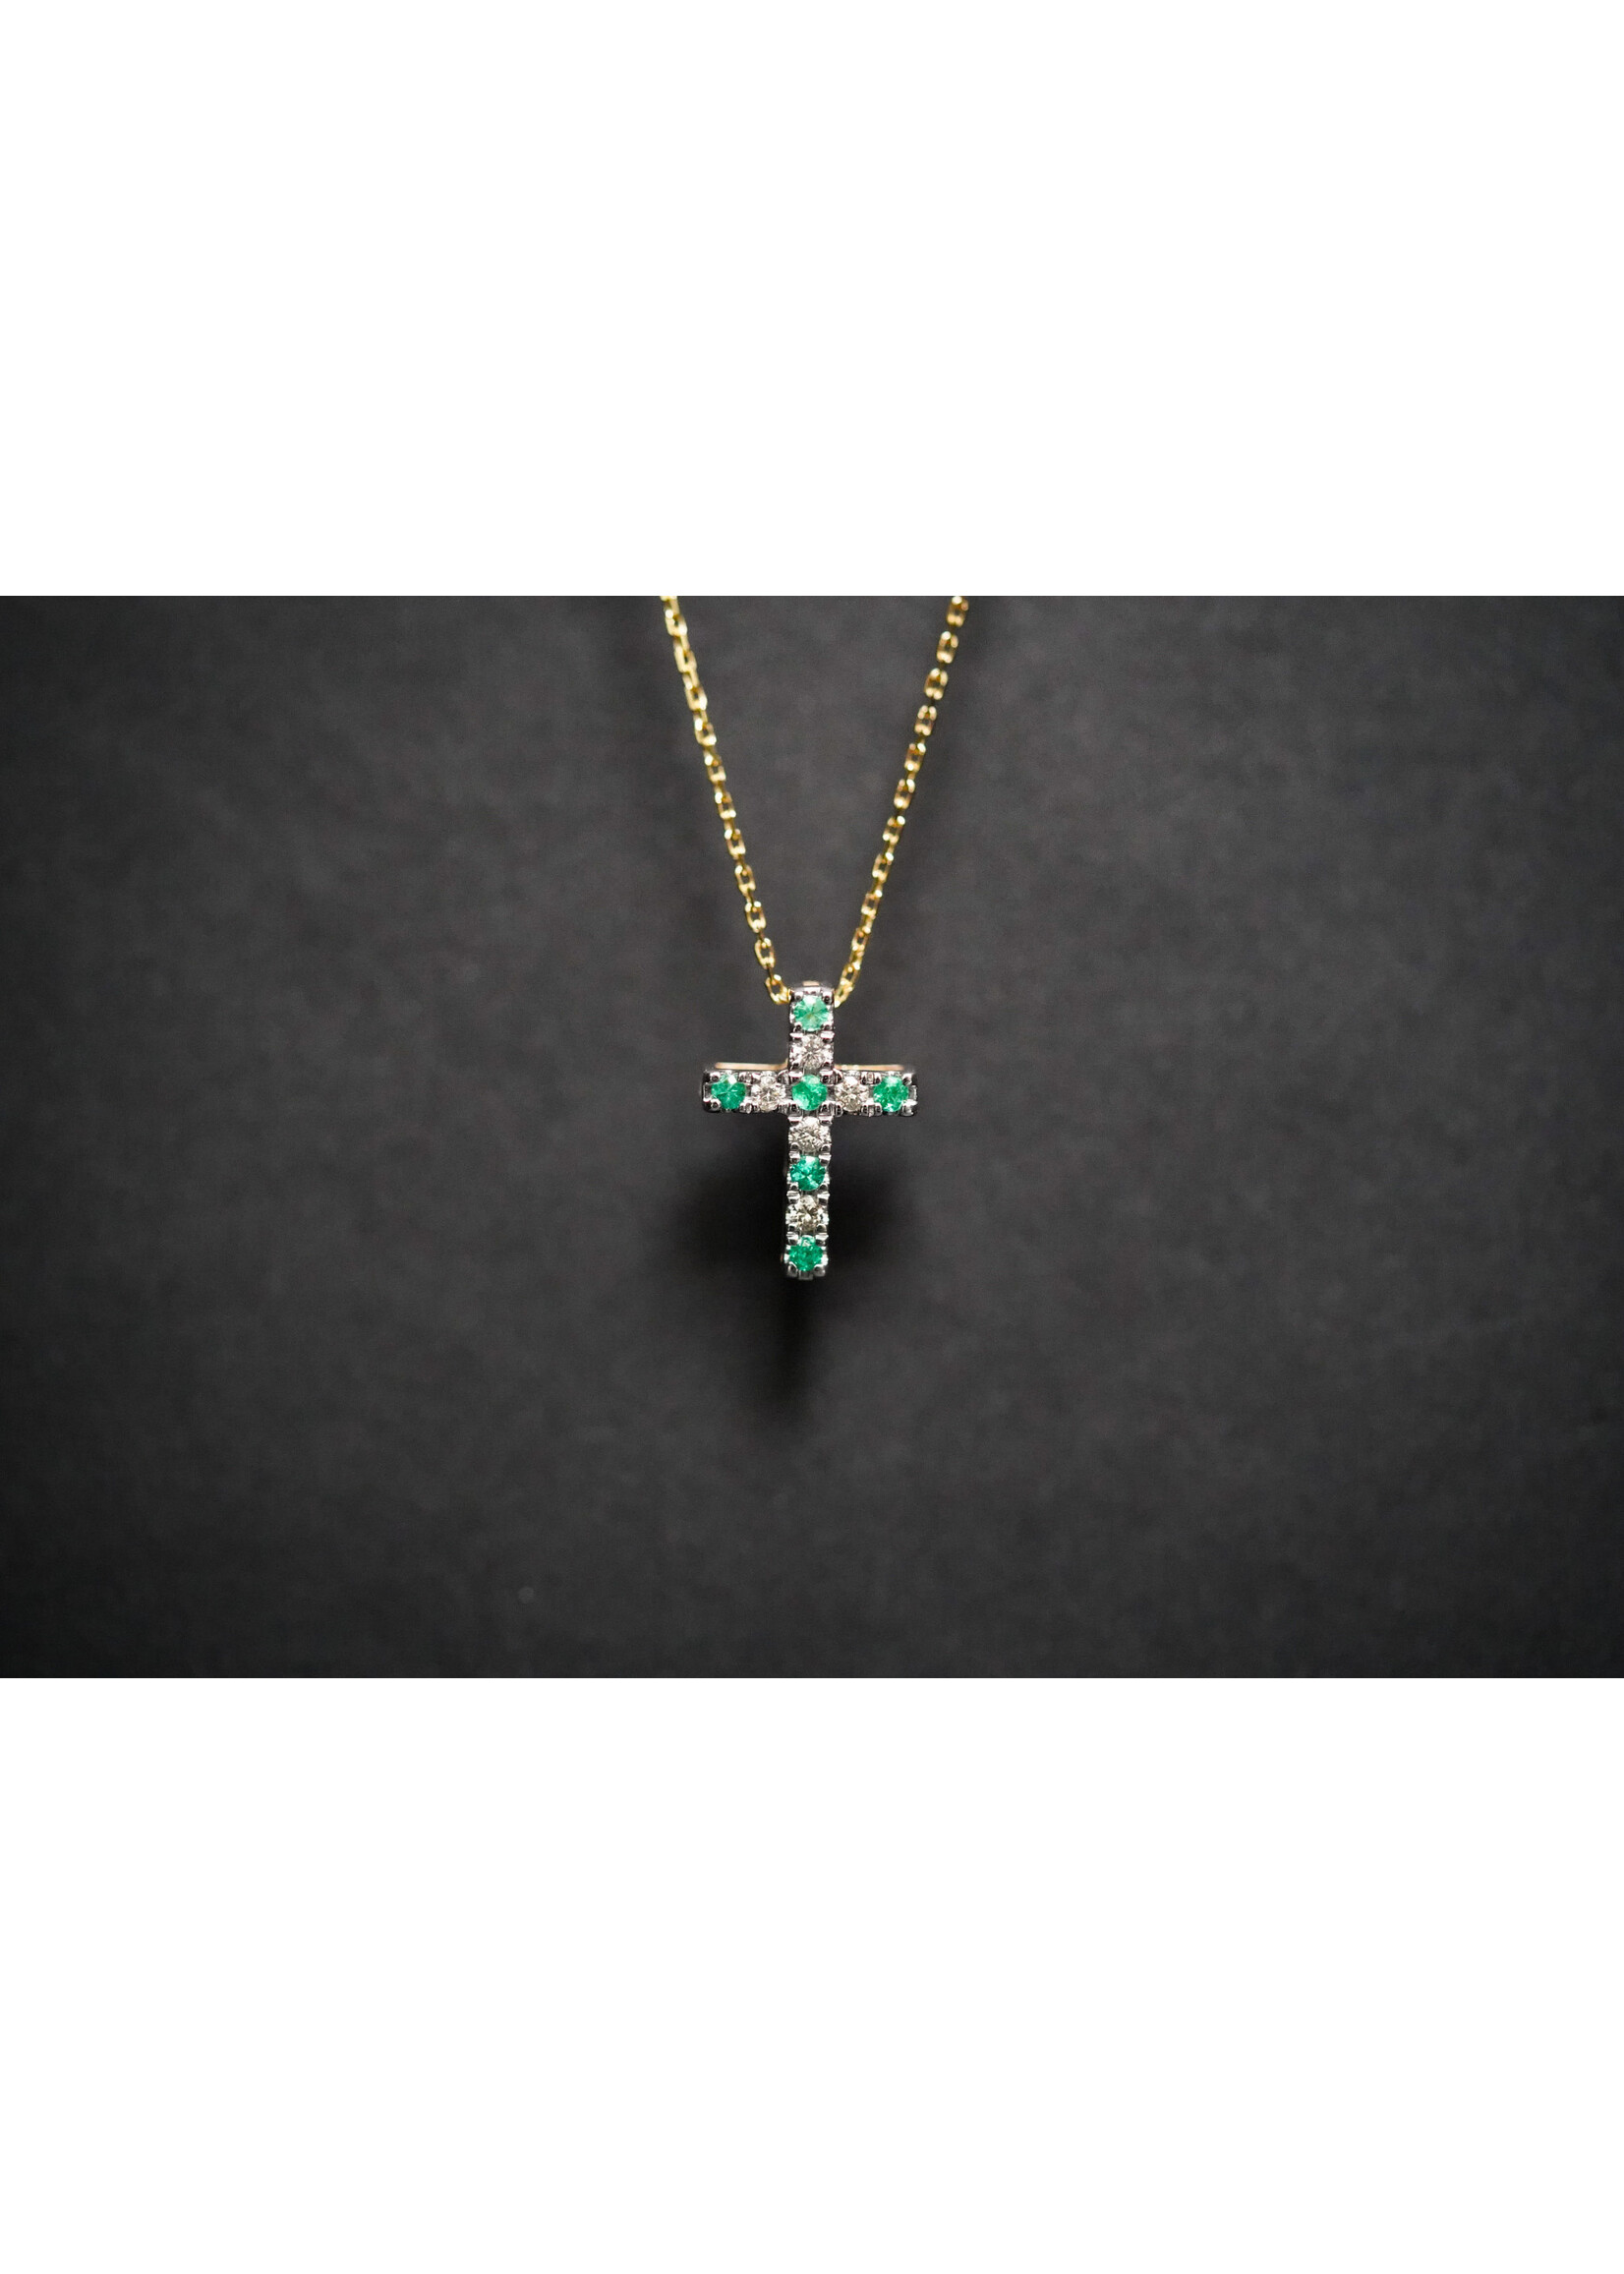 14KY 1.8g .18ctw Emerald & Diamond Cross Necklace 16-18"